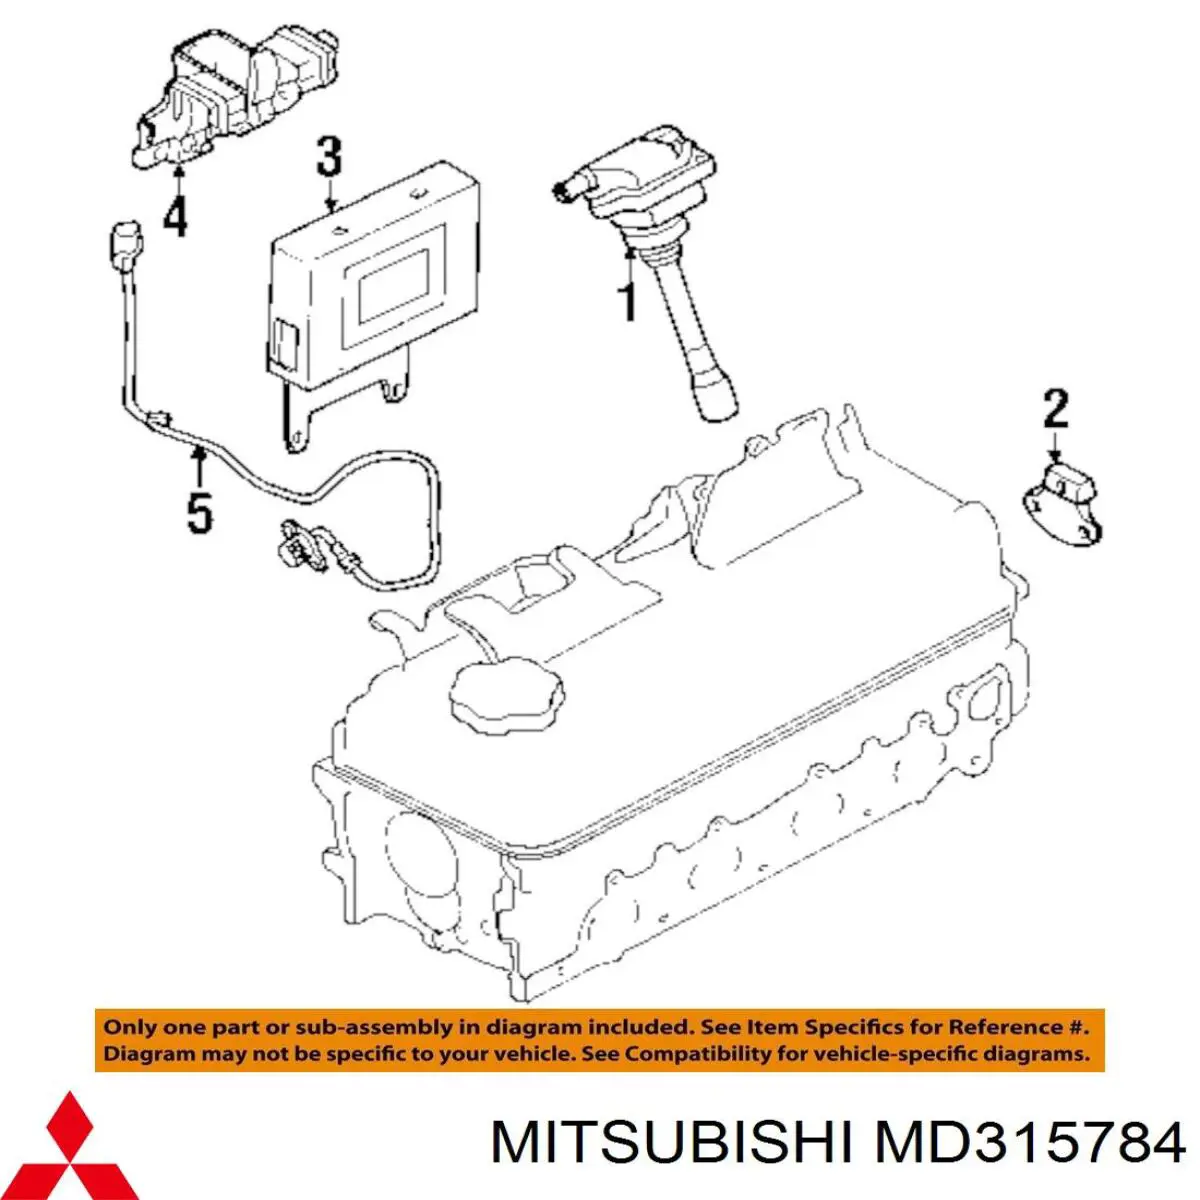 MD315784 Mitsubishi sensor de detonacion